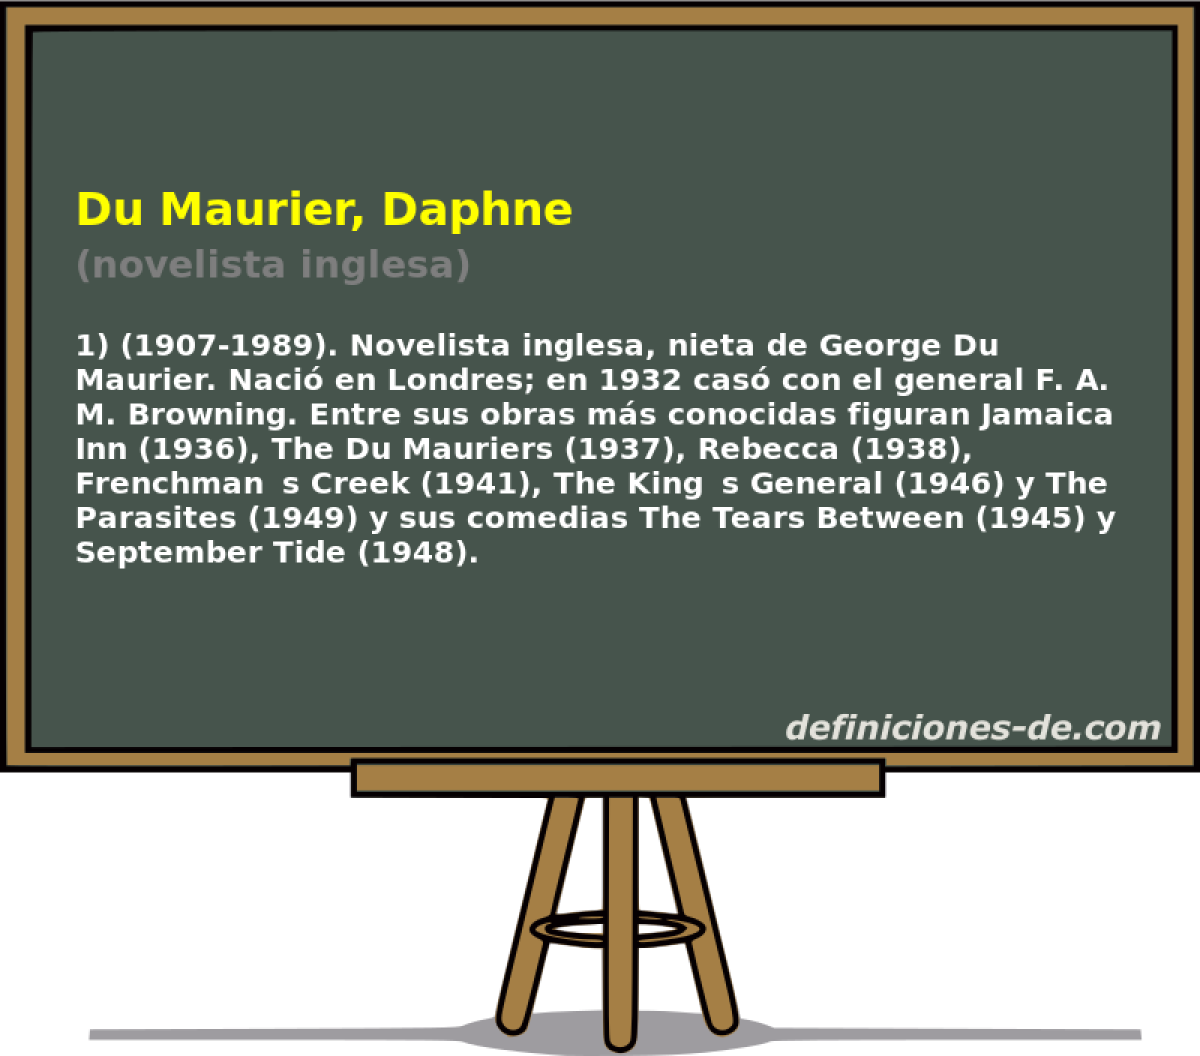 Du Maurier, Daphne (novelista inglesa)